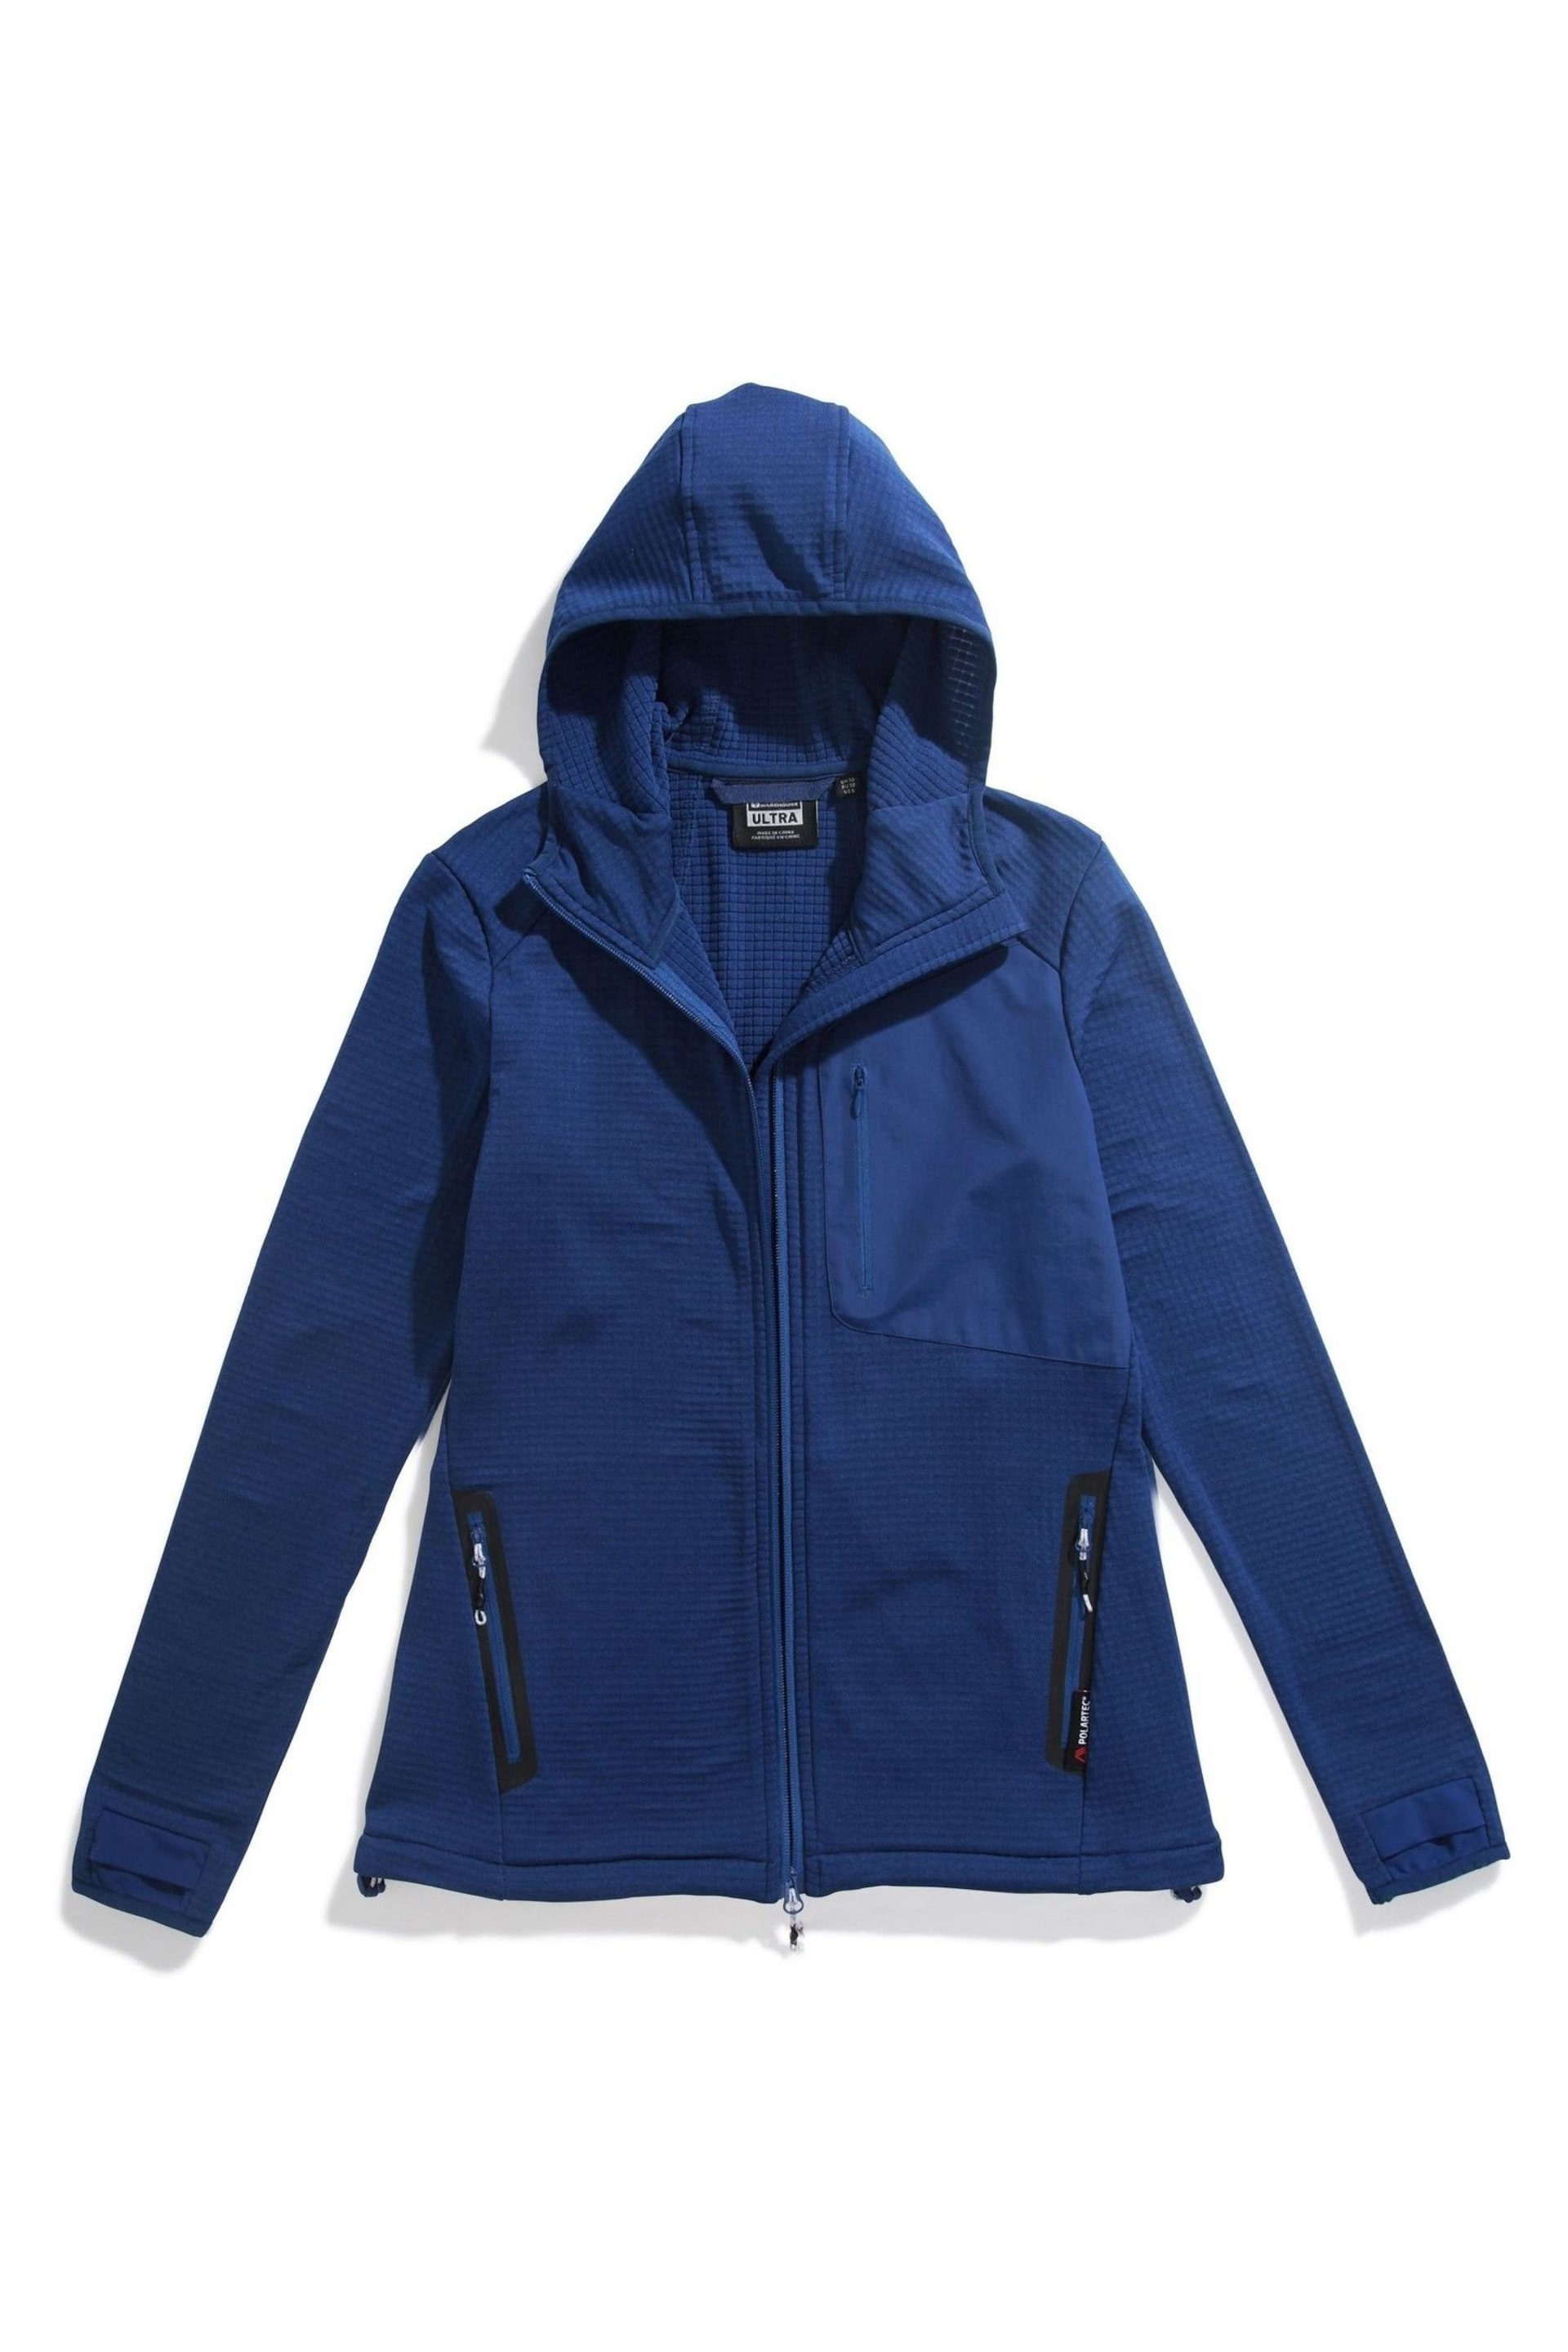 Mountain Warehouse Blue Womens Ultra Crevasse Water Resistant Hooded Fleece - Image 1 of 1